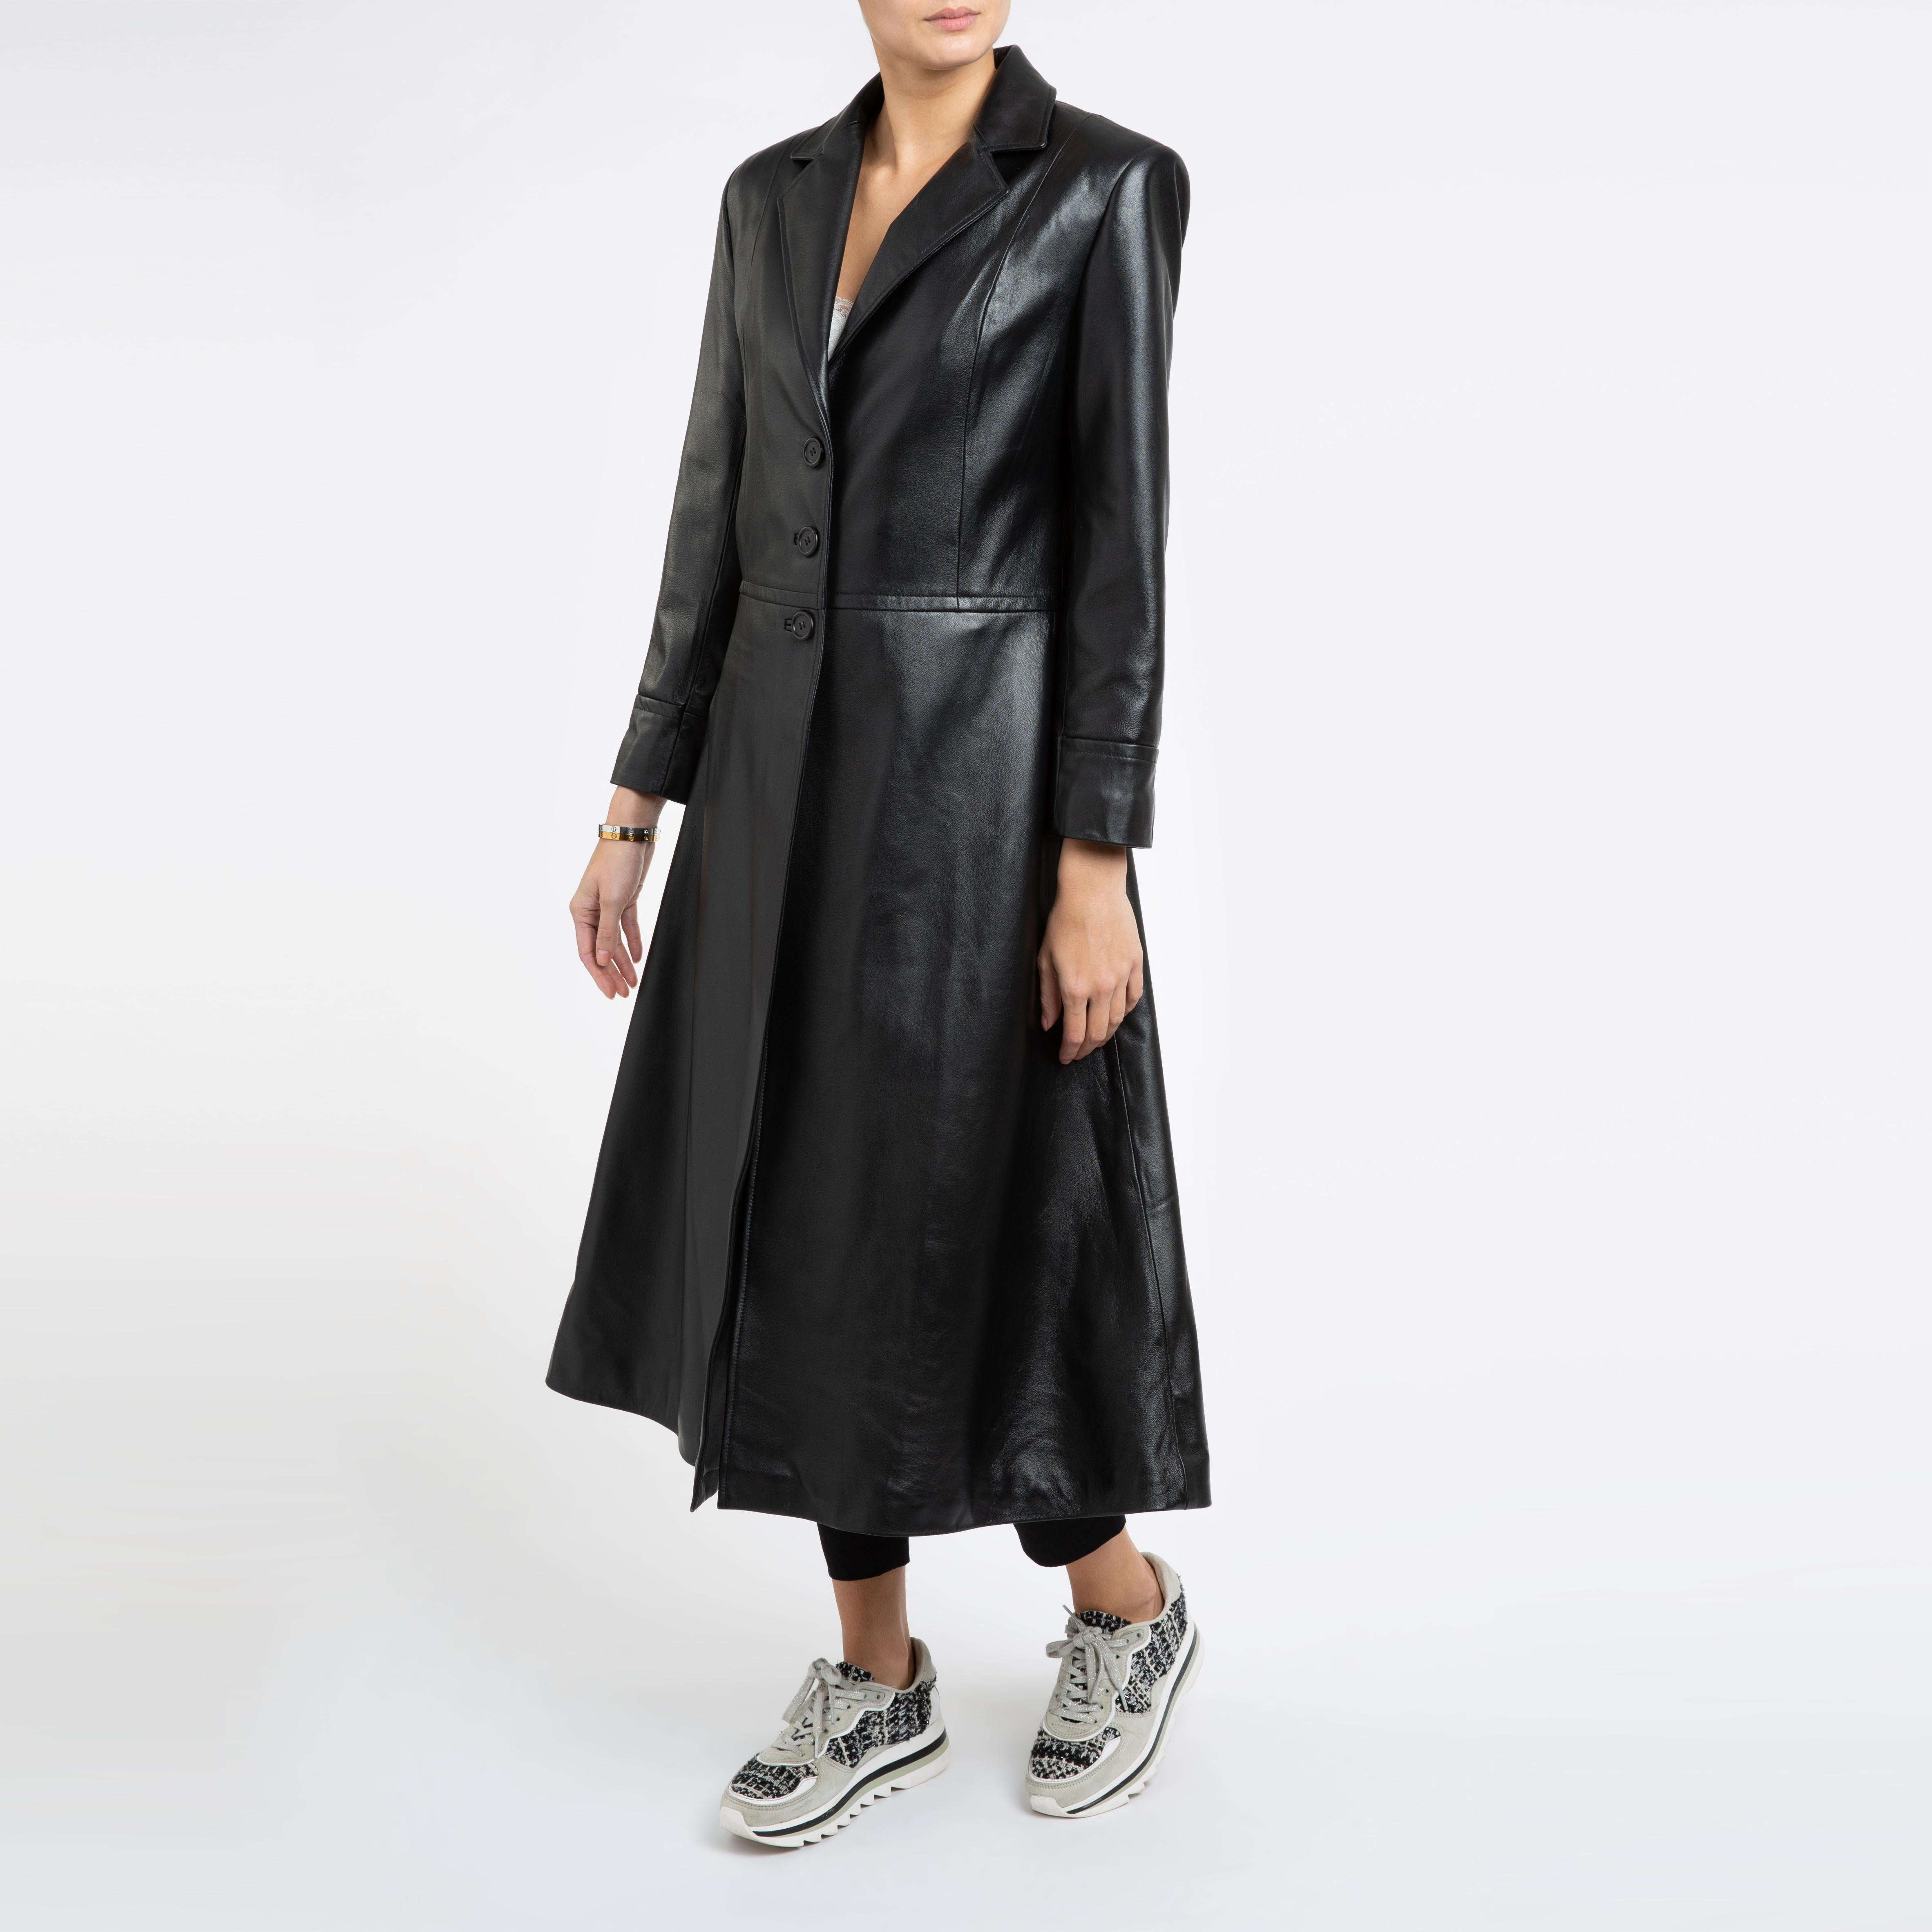 Verheyen London Oversize 70's Leather Trench Coat in Black - Size uk 6 For Sale 4